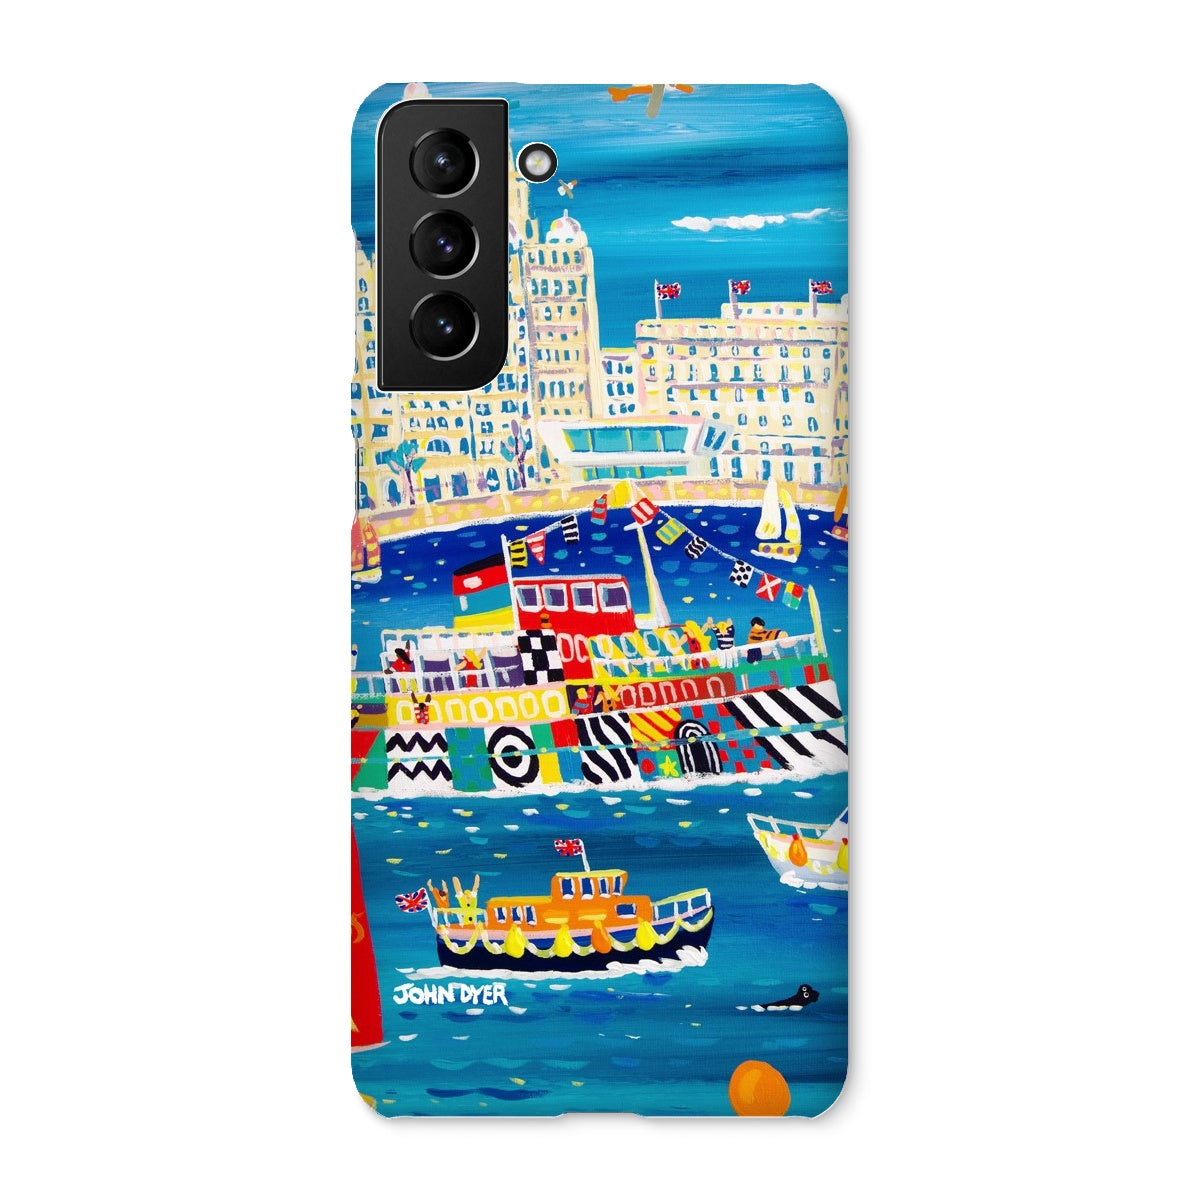 Snap Art Phone Case. Liverpool Mersey River Dazzle Ferry. Artist John Dyer. Cornwall Art Gallery